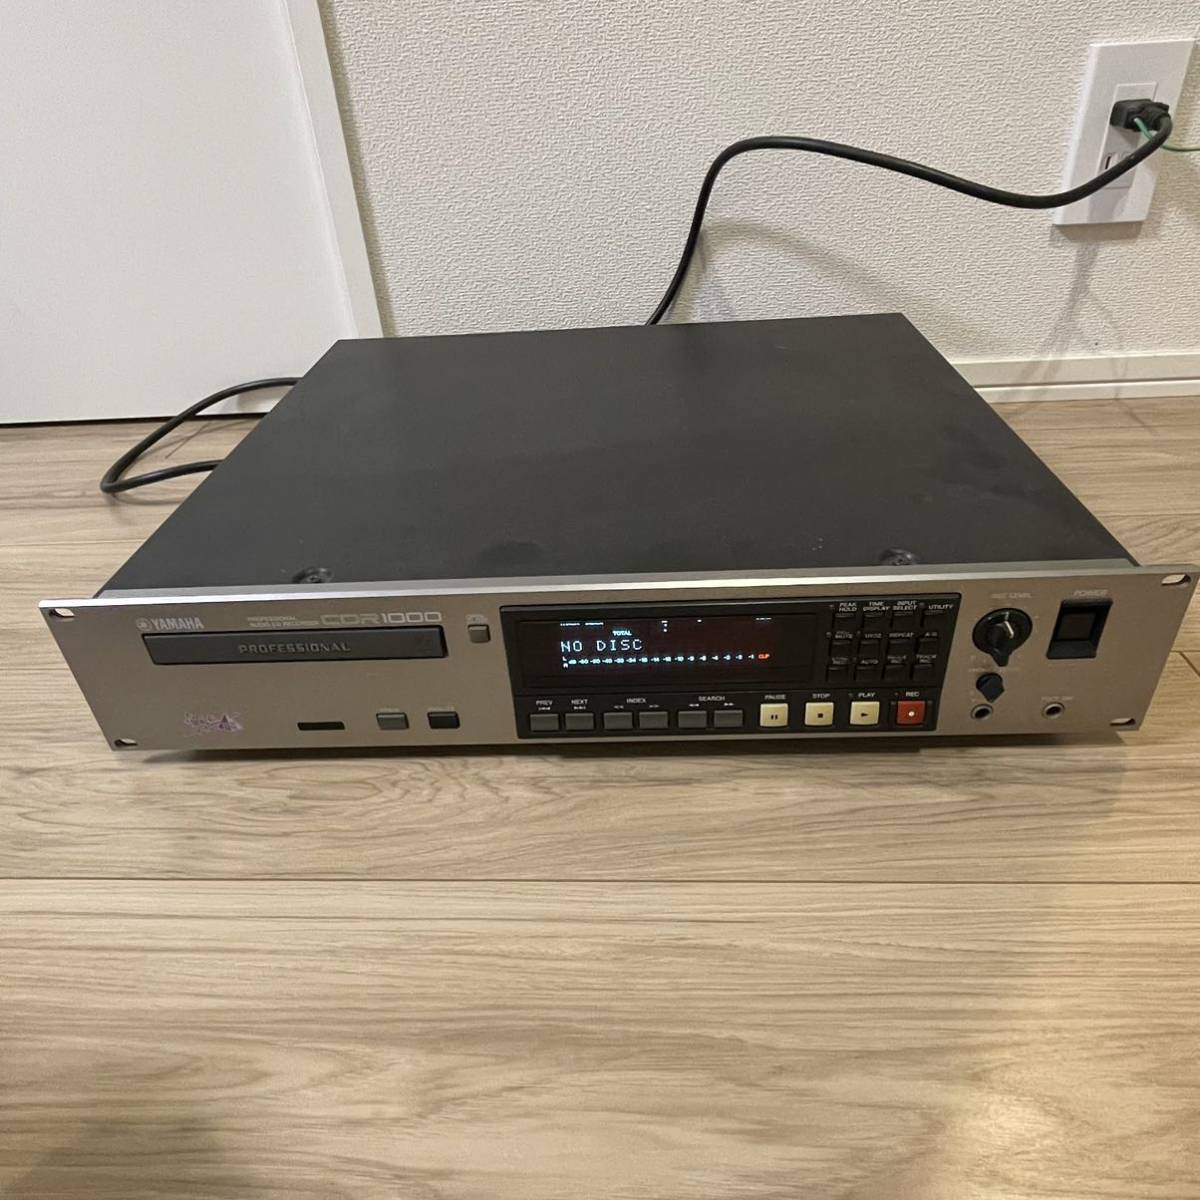 F338 YAMAHA ヤマハ 業務用 Professional Audio CD Recorder